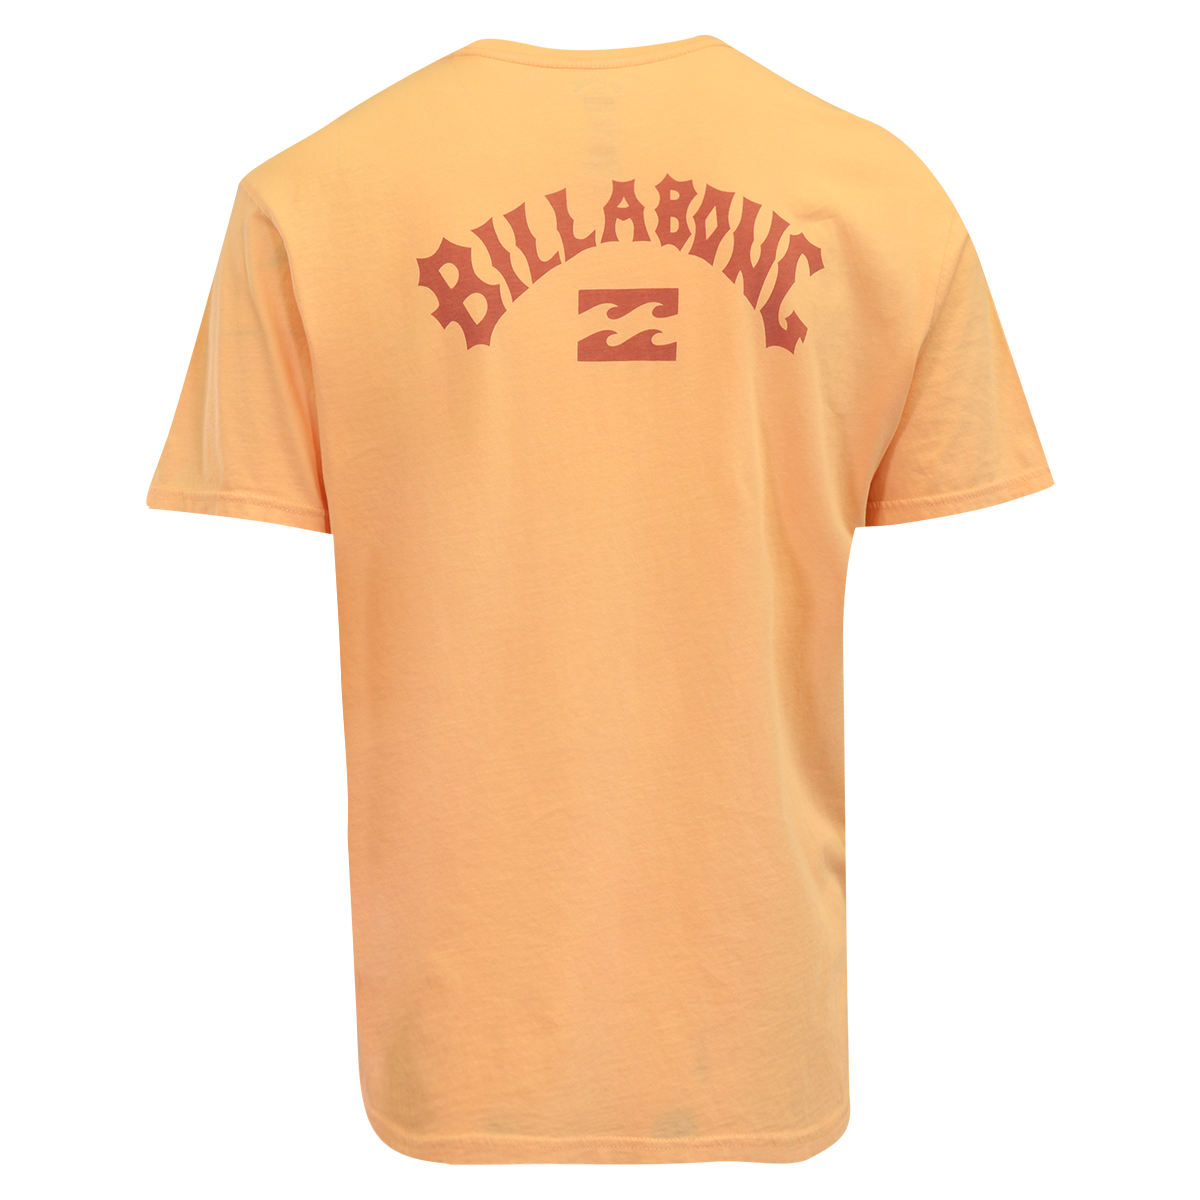 Billabong Men's T-Shirt Peach Wave Washed Chest Logo S/S (S11)